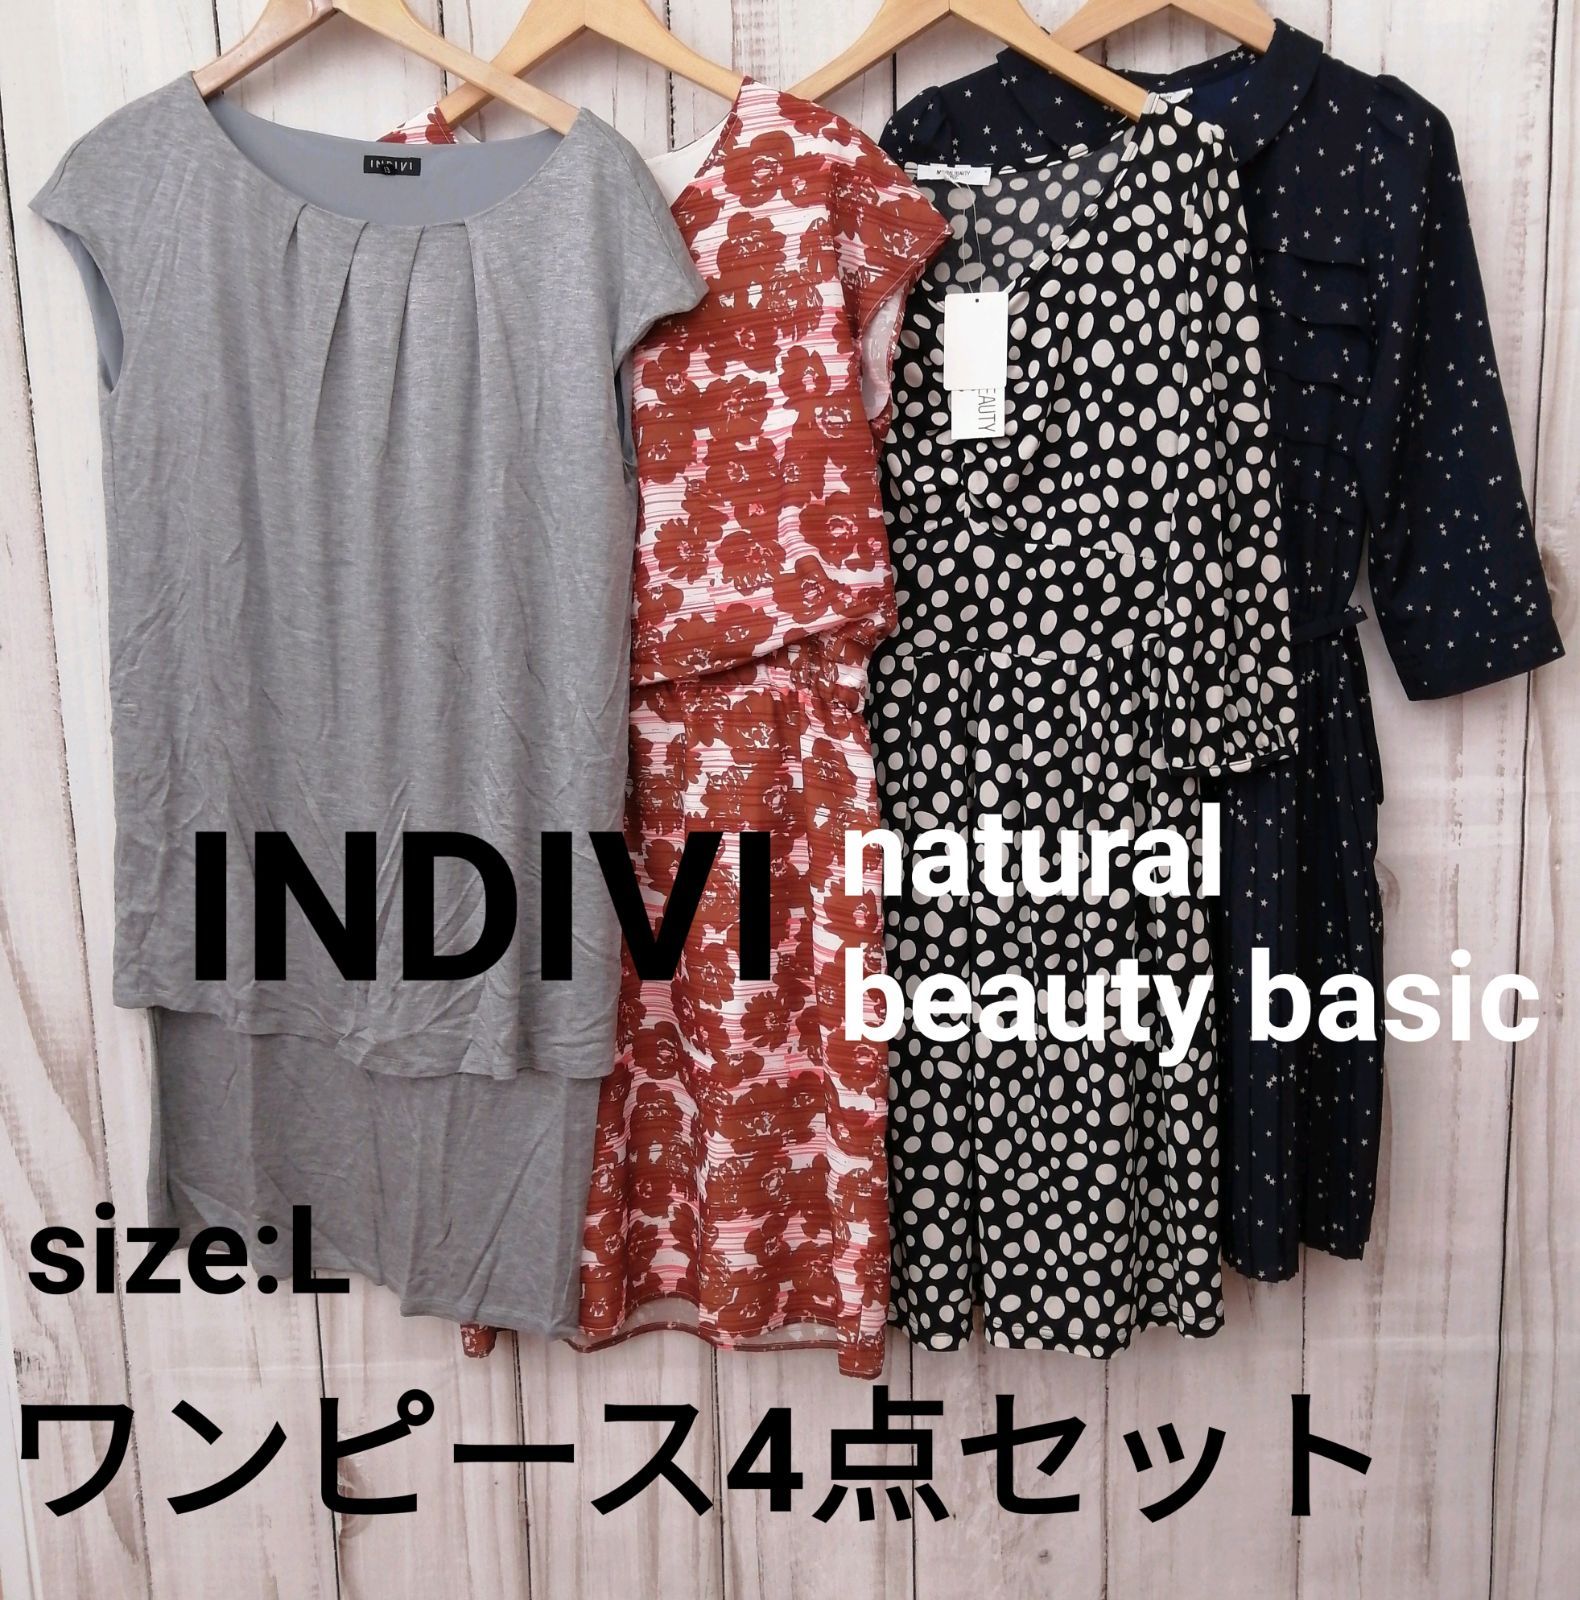 INDIVI/natural beauty basic ワンピース4点セット花柄、ドット、星柄ワンピース 0136